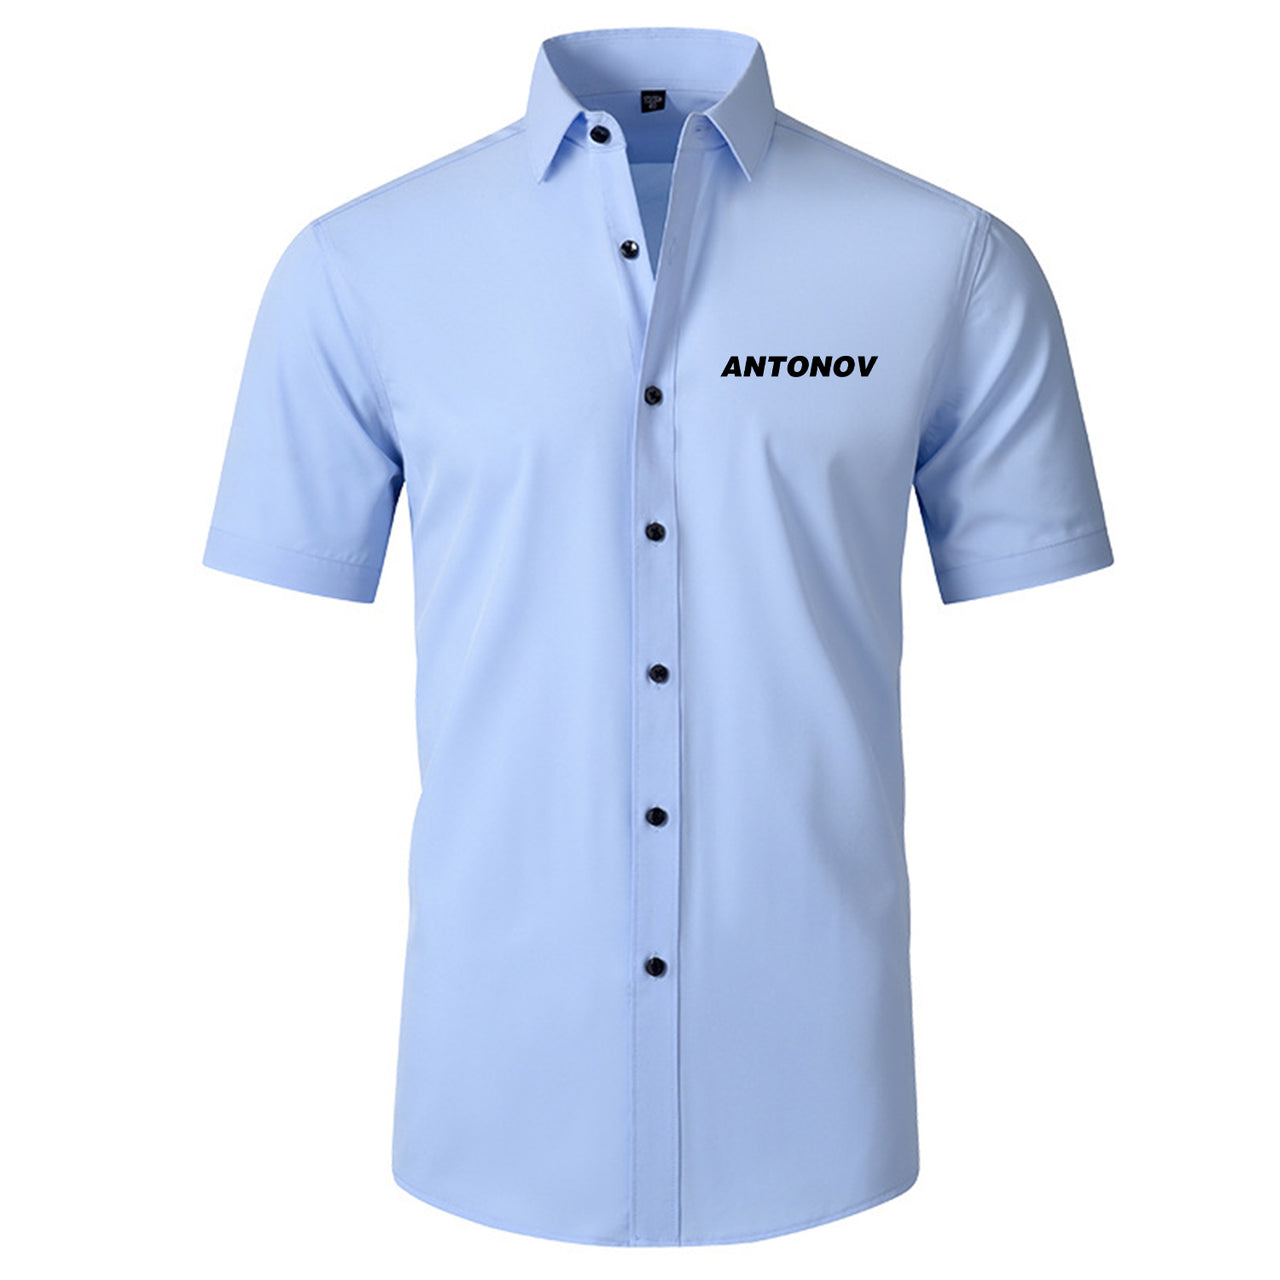 Antonov & Text Designed Short Sleeve Shirts